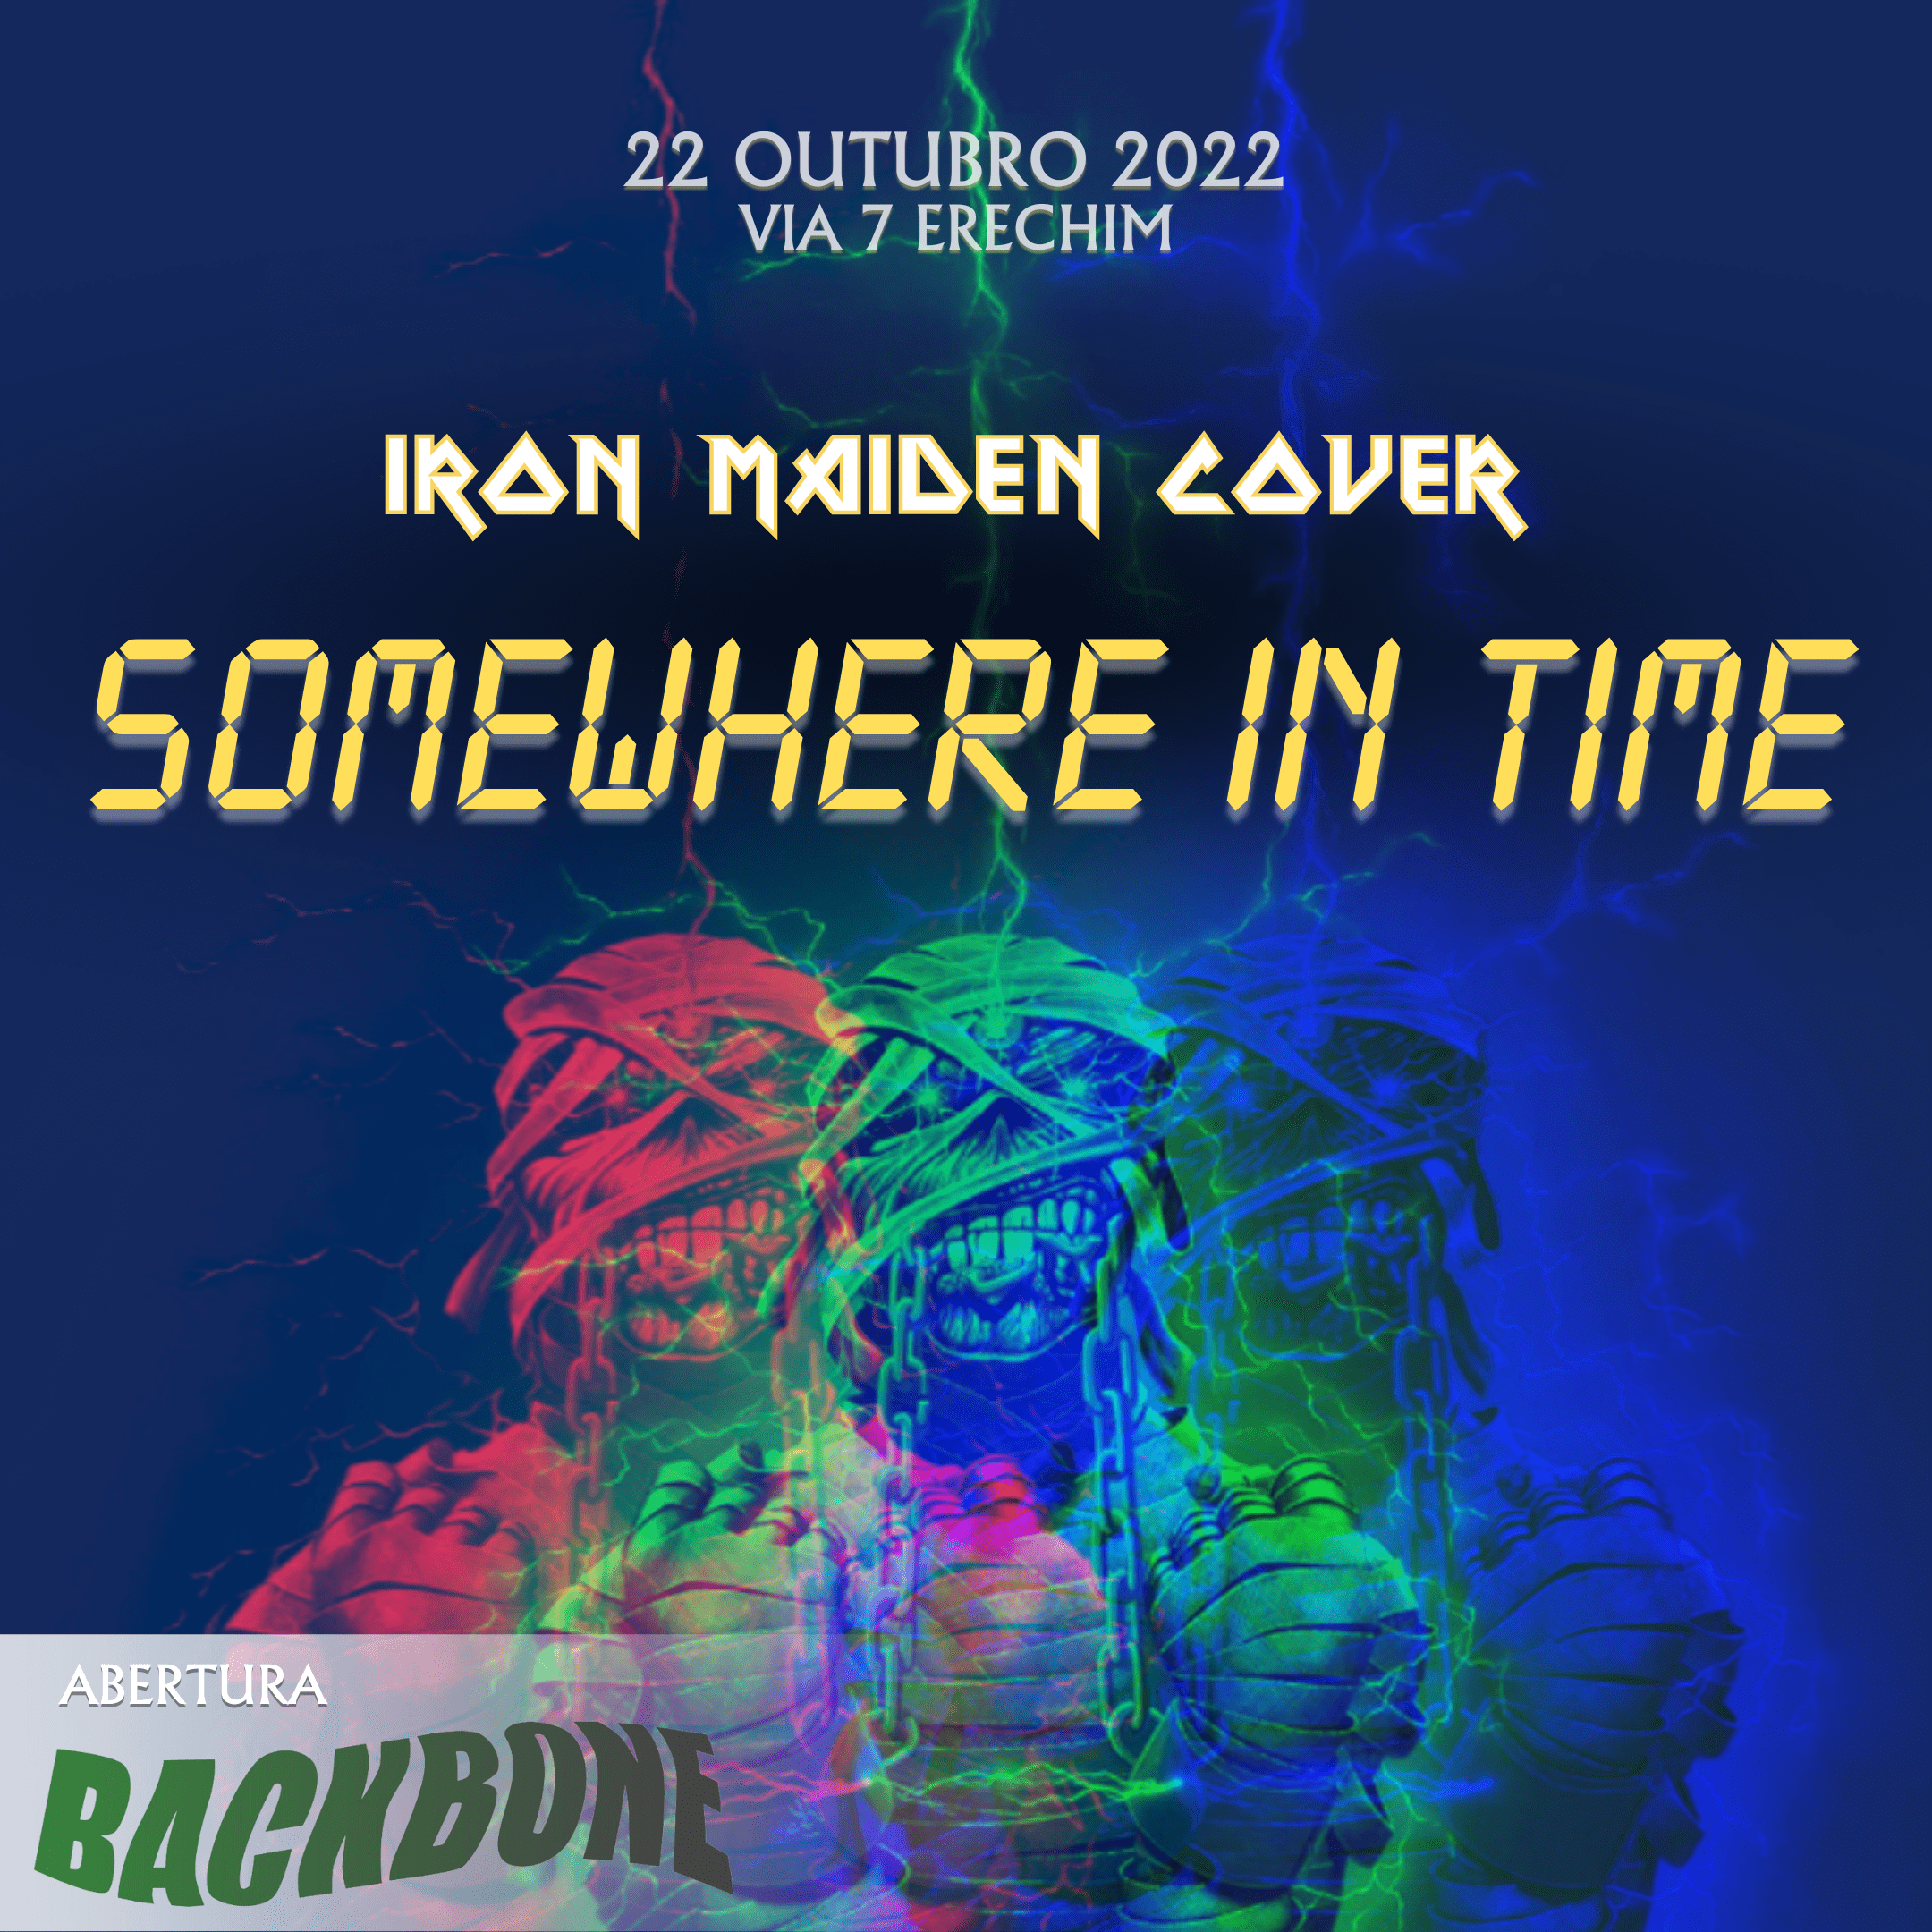 Banda Somewhere in Time Iron Maiden Cover fara show iconico em Erechim